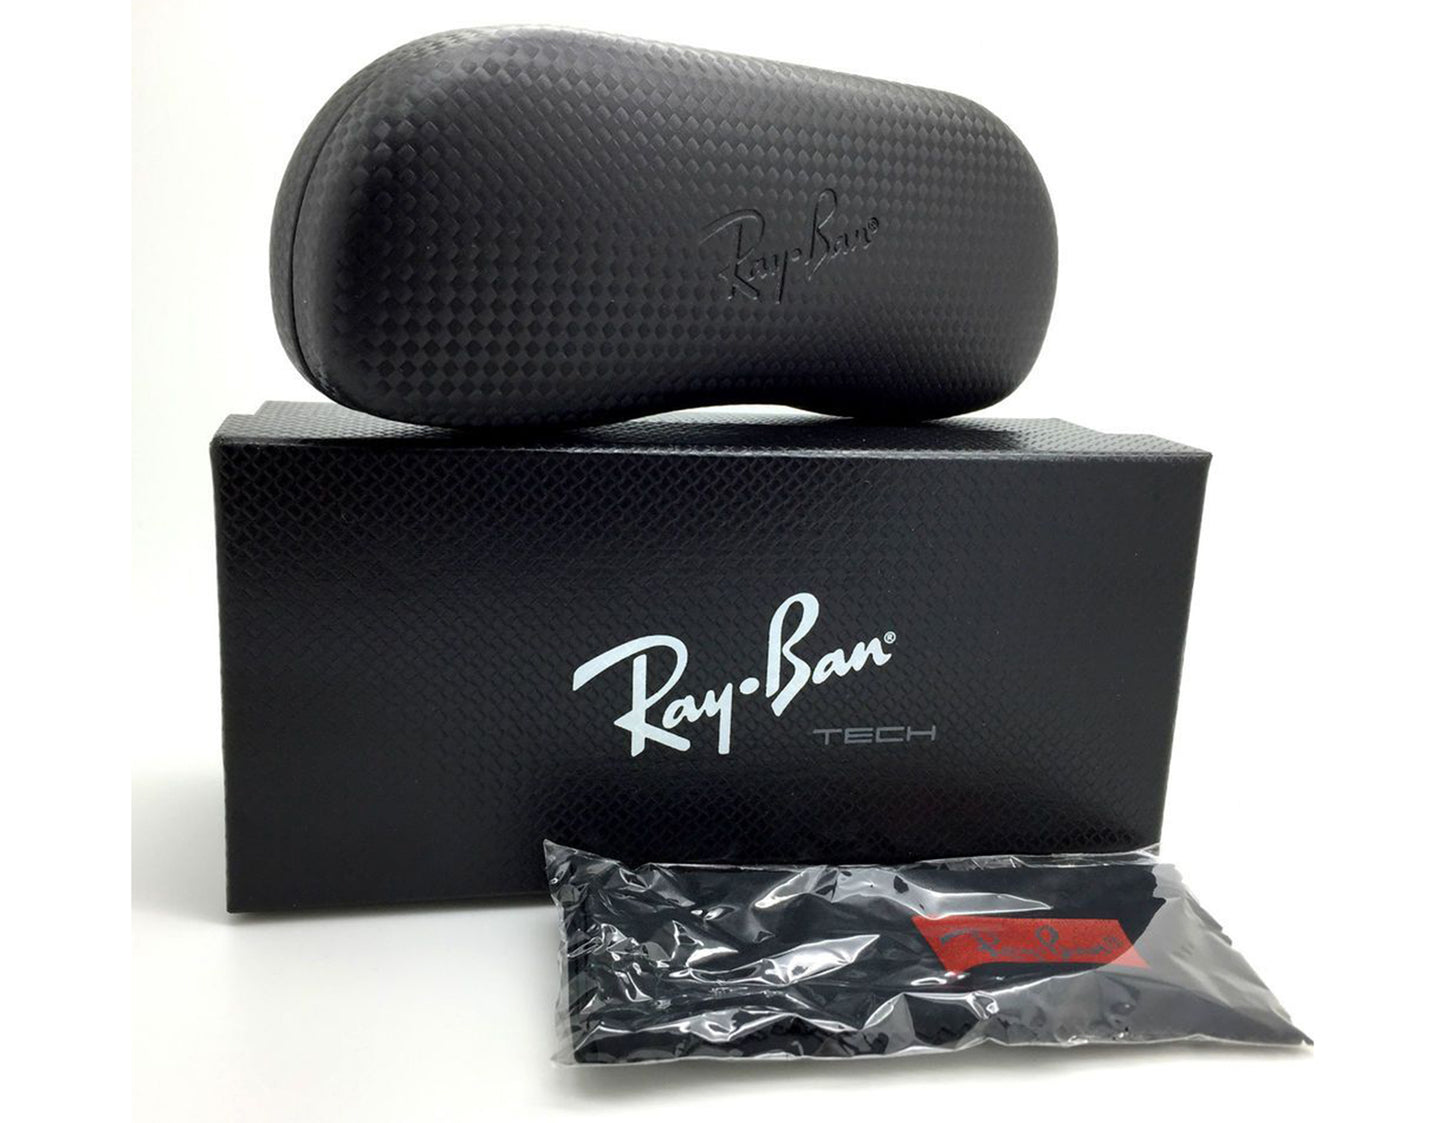 Ray Ban RX7047-5196-54 54mm New Eyeglasses